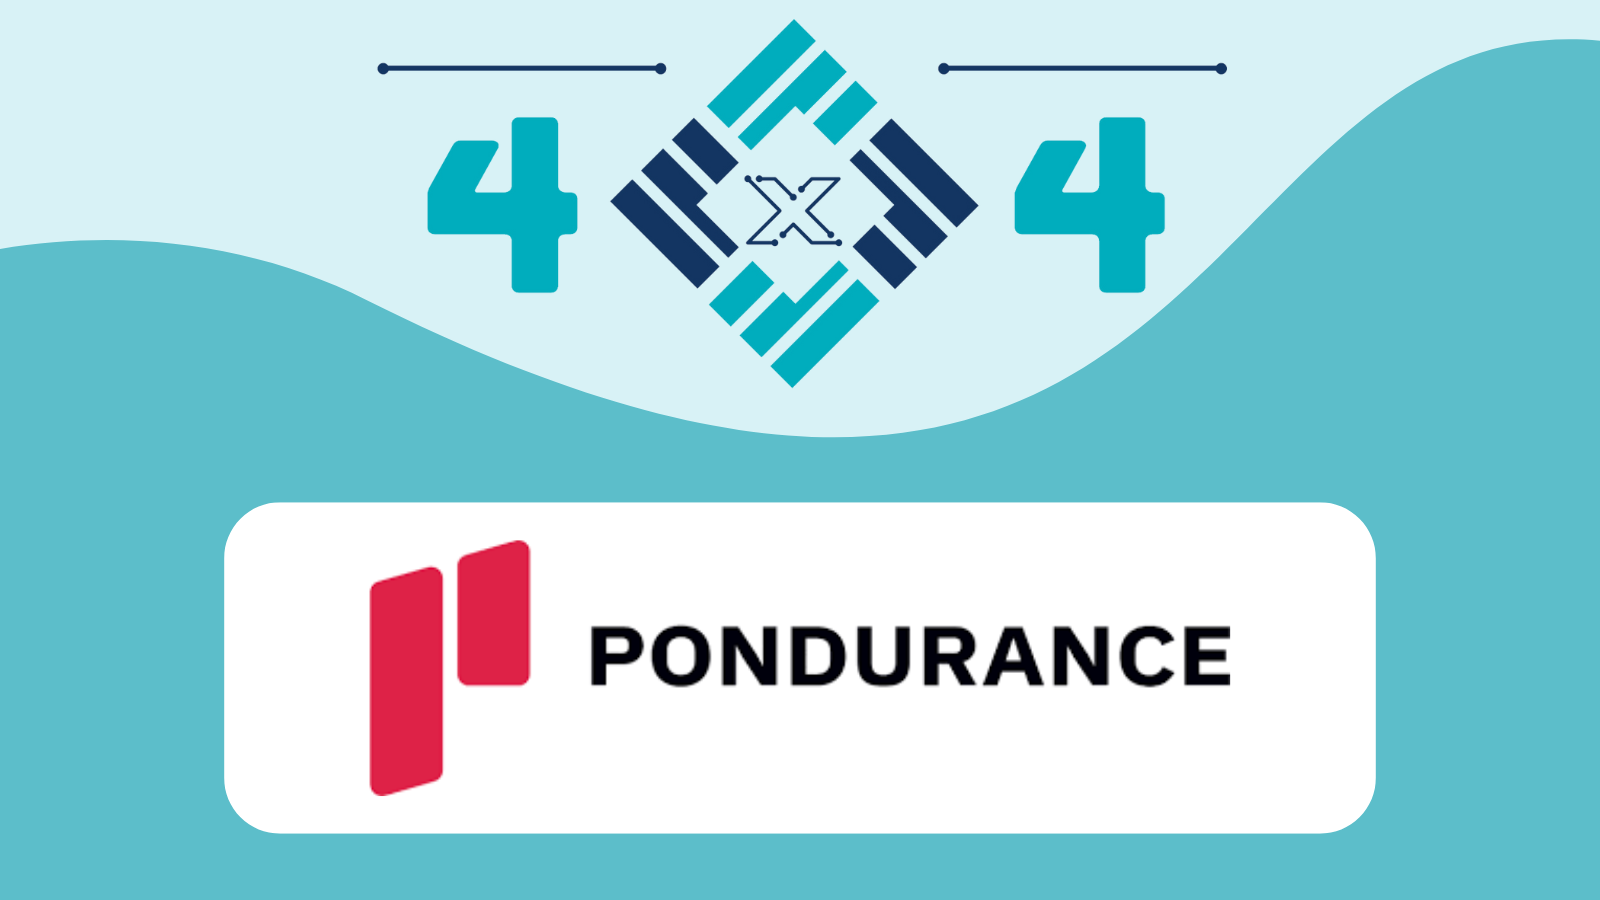 Pondurance 4x4 Logo